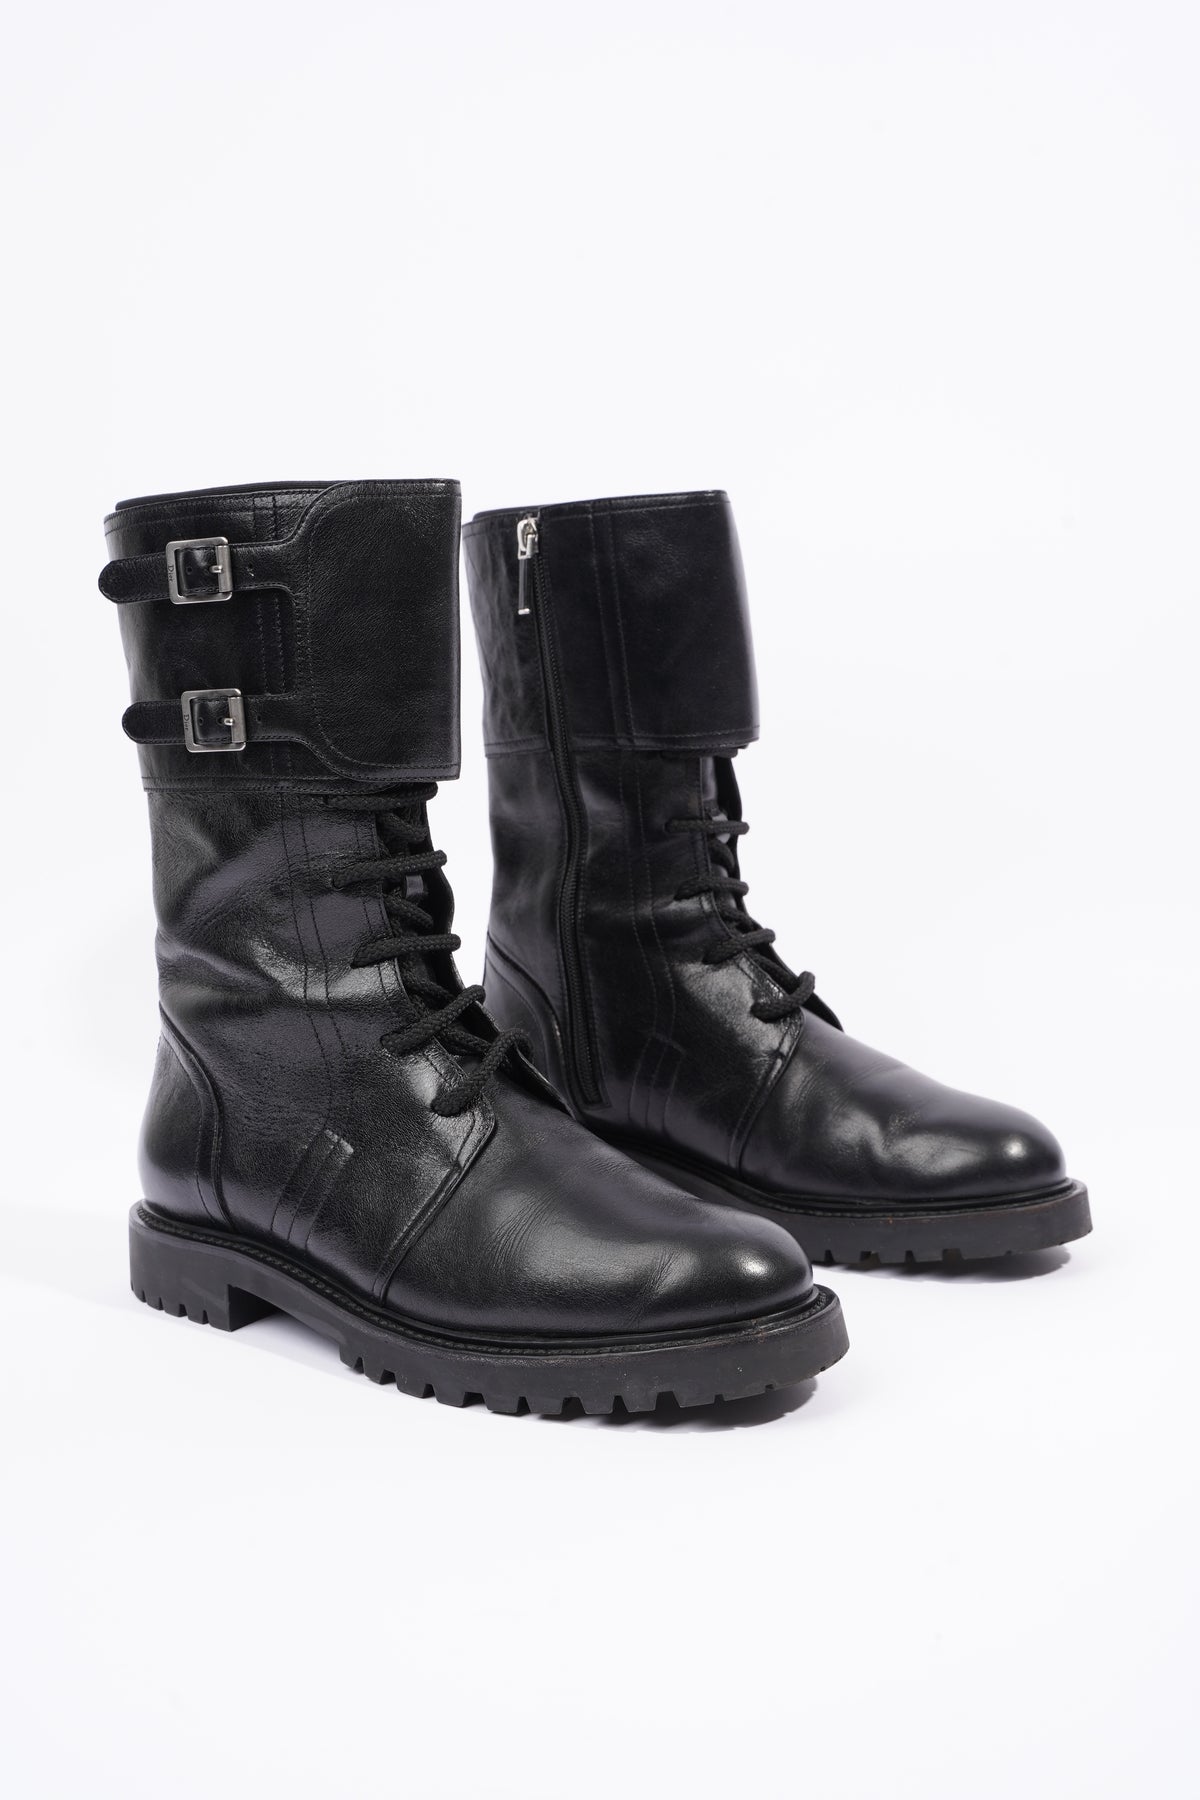 Leather biker boots Louis Vuitton Black size 38.5 EU in Leather